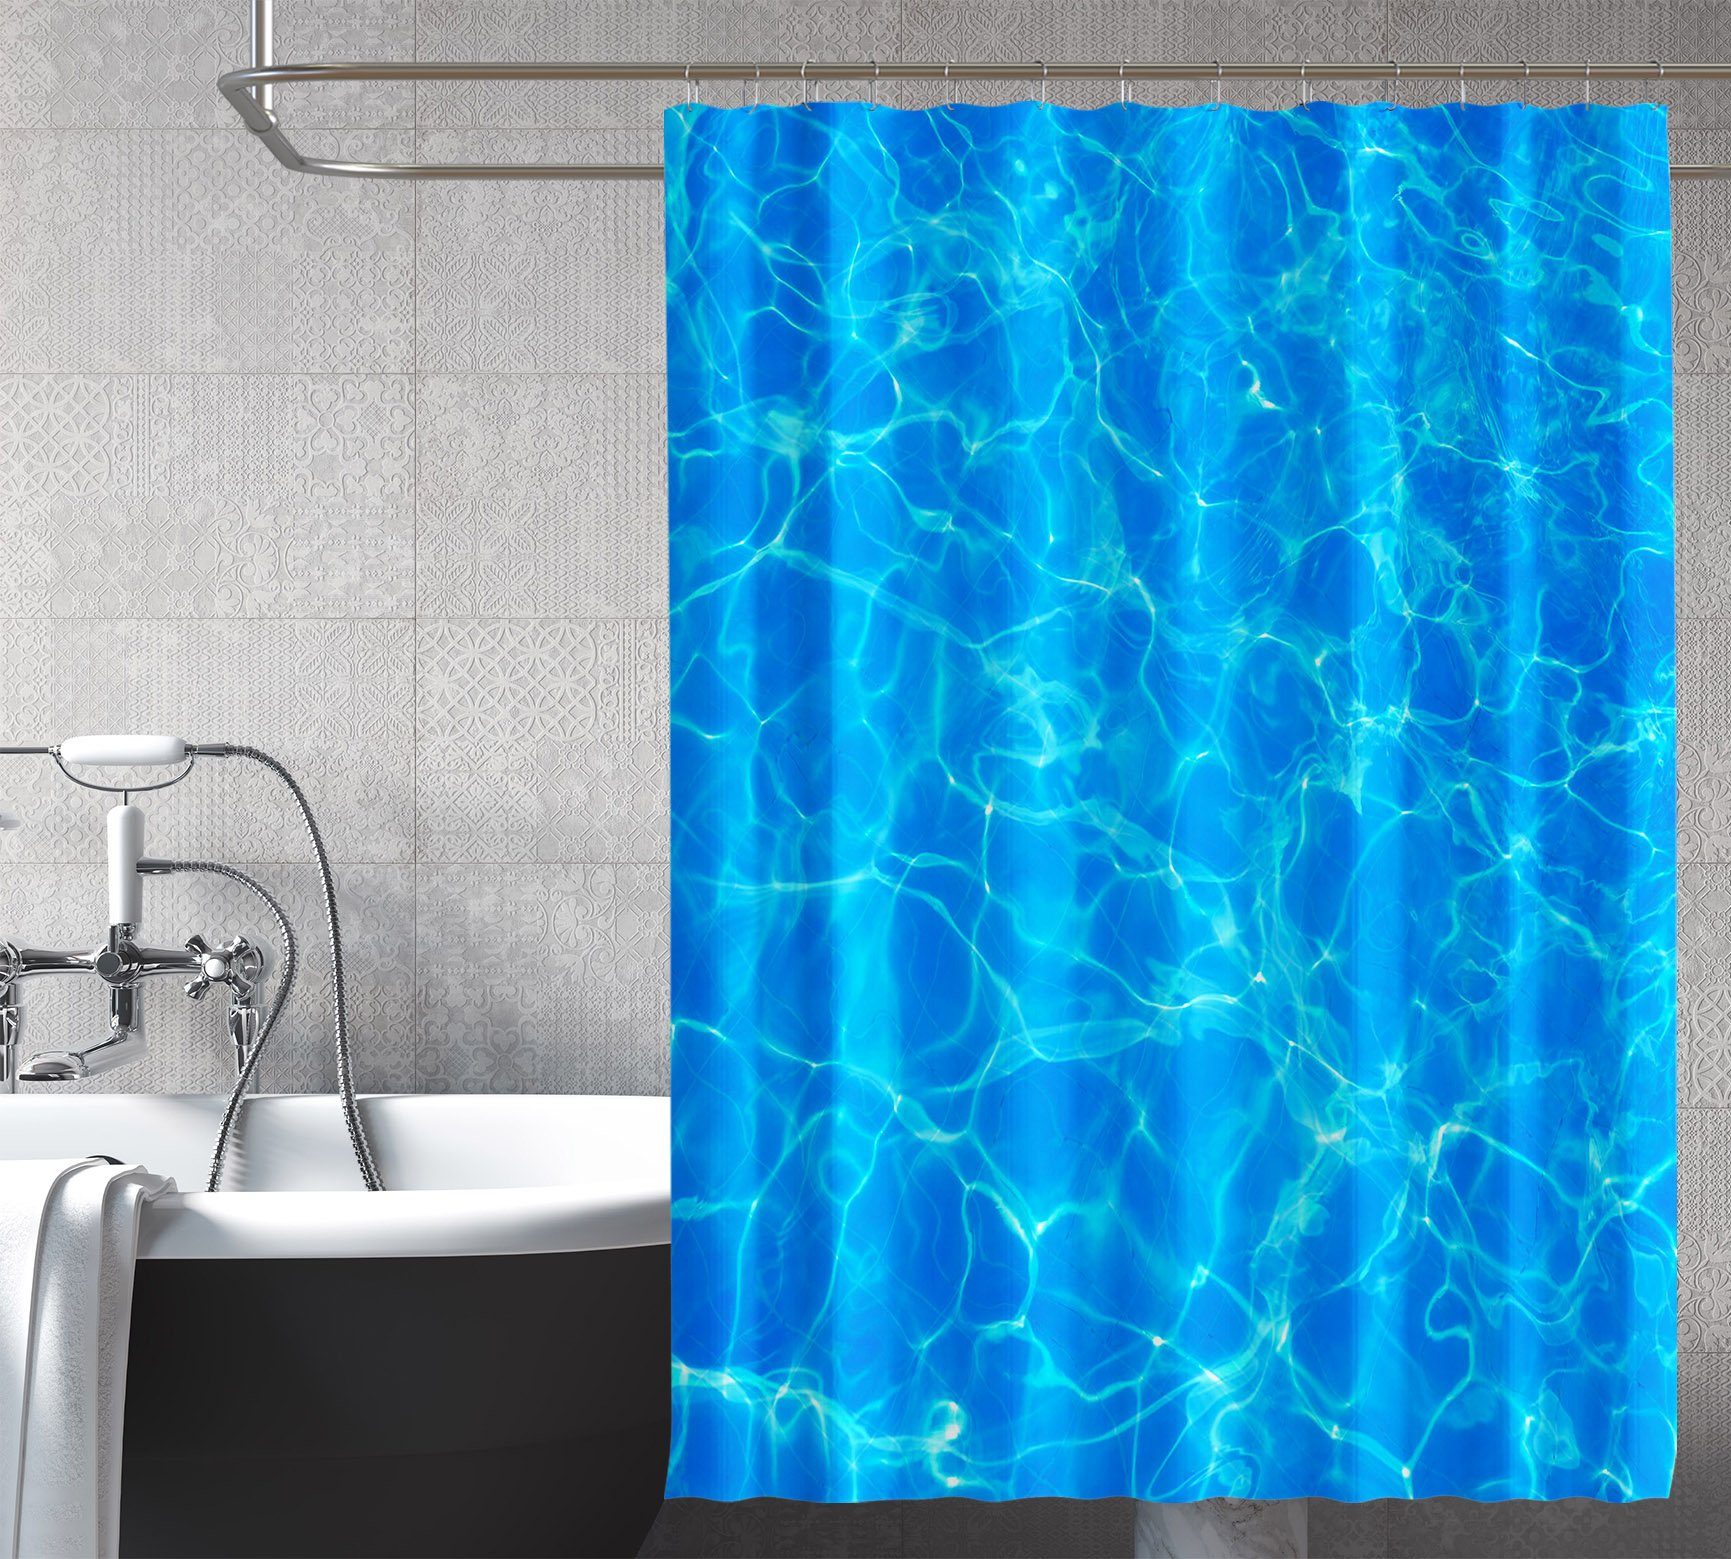 3D Sparkling Water 065 Shower Curtain 3D Shower Curtain AJ Creativity Home 